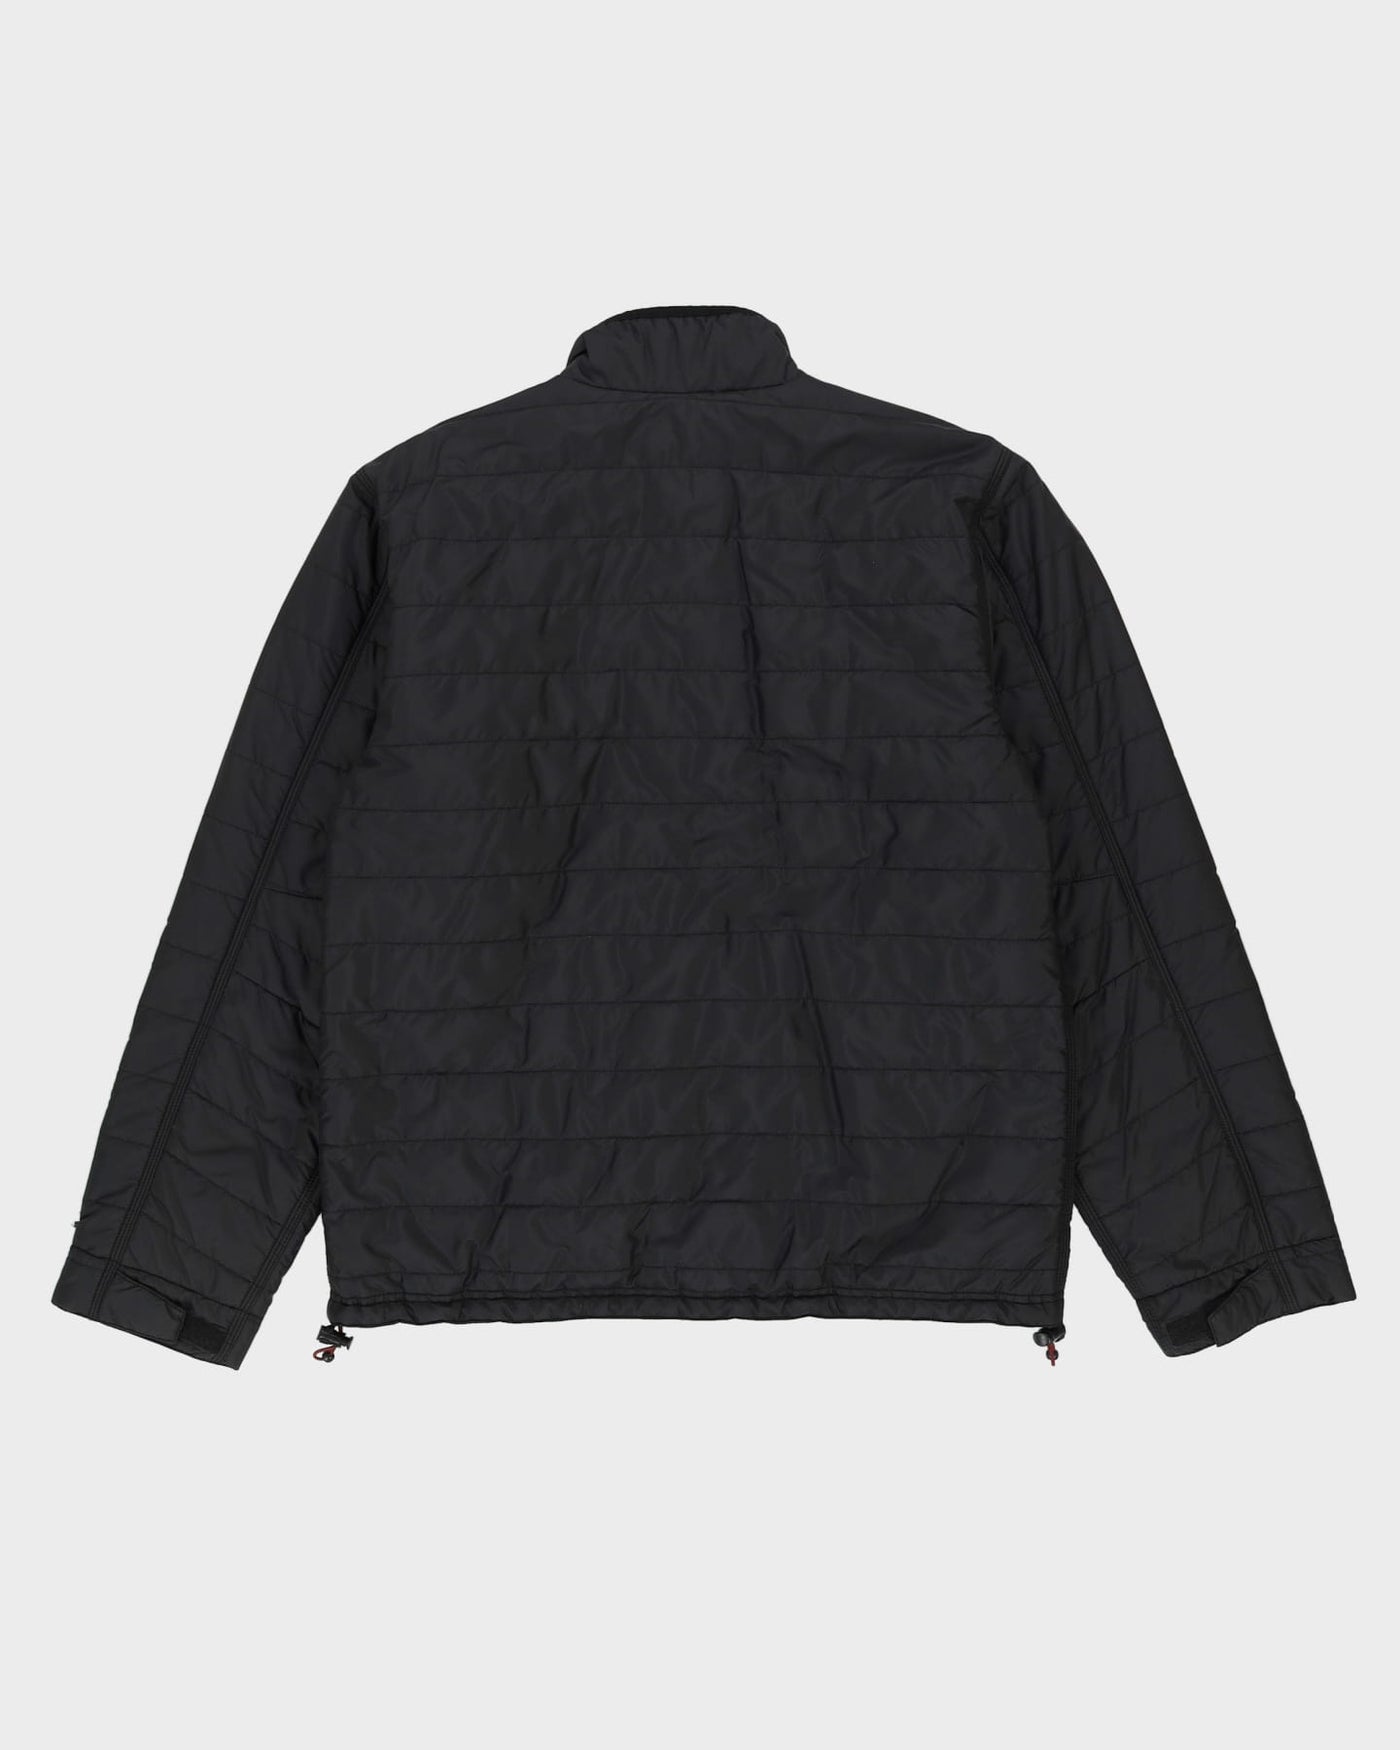 Carhartt Black Padded Jacket - M